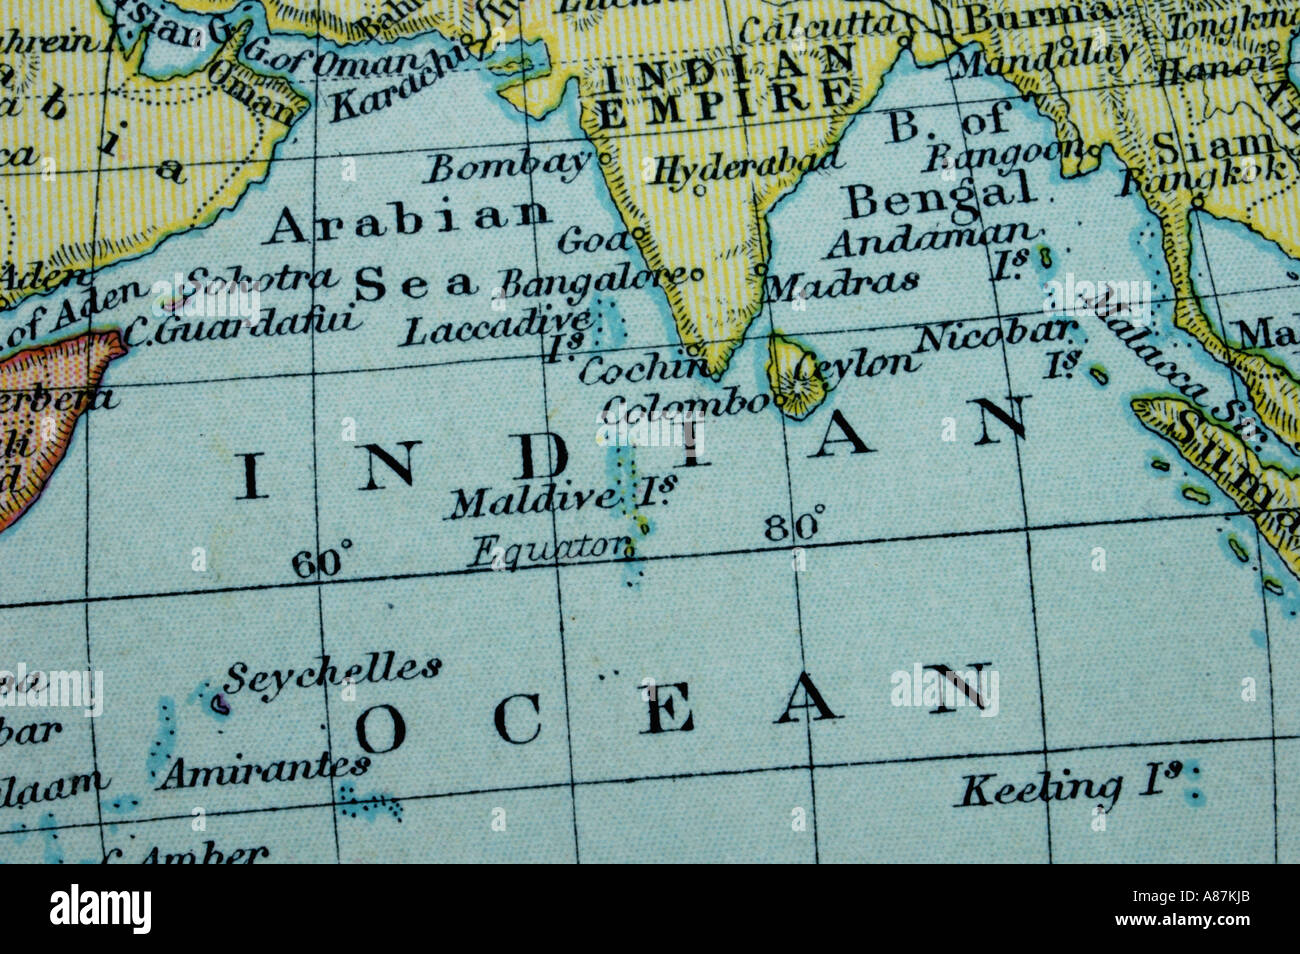 Индийский океан на карте. Остров в индийском океане Цейлон. Карта Азии и индийского океана. Индийский океан фото на карте. Индийский океан путешественники